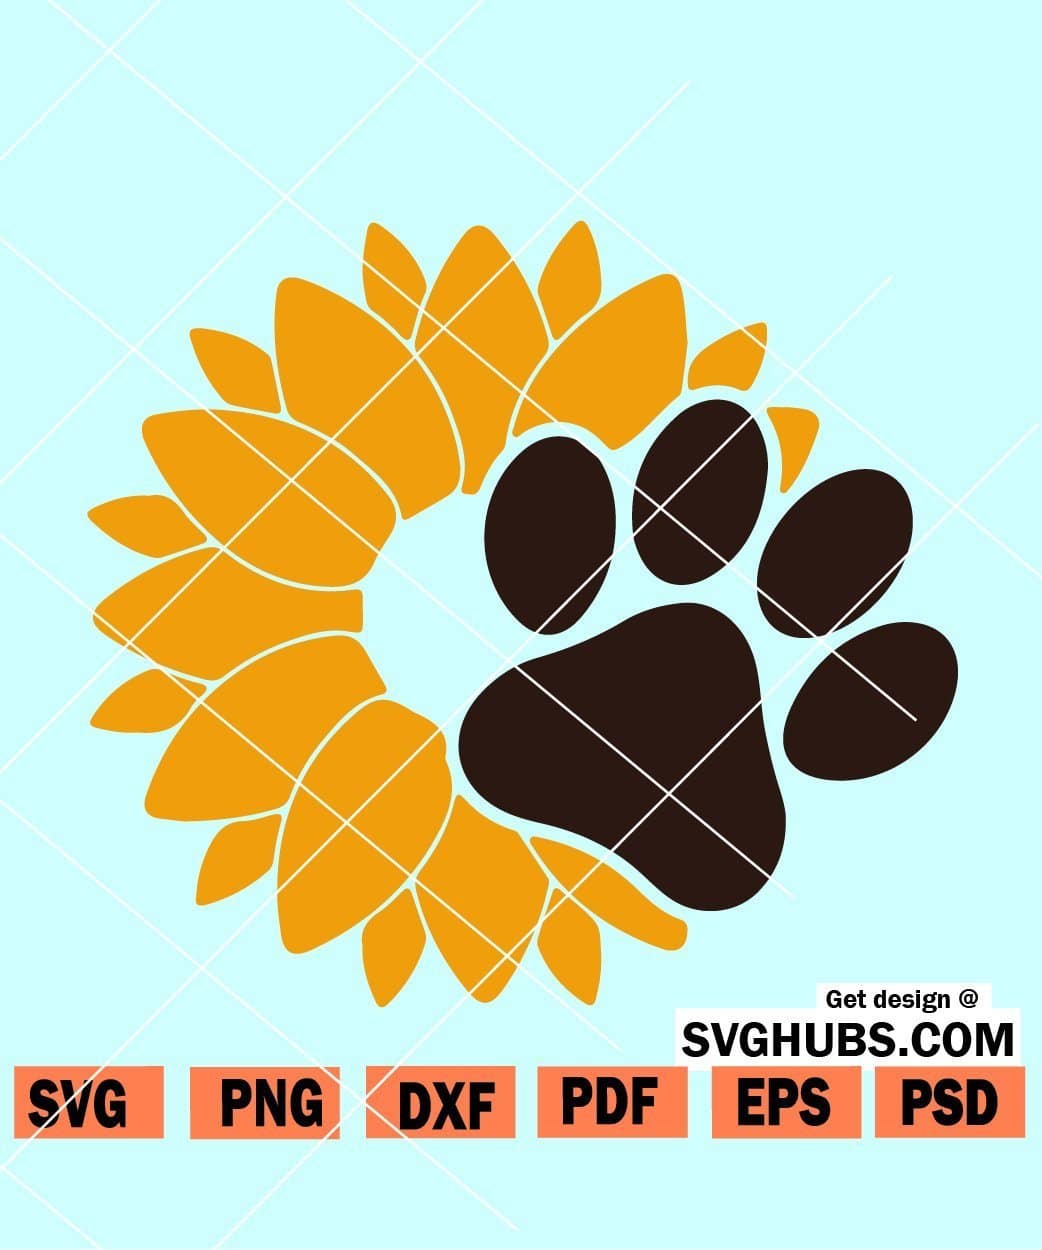 Sunflower Paw Print SVG, Sunflower paw SVG, Sunflower with dog paw SVG